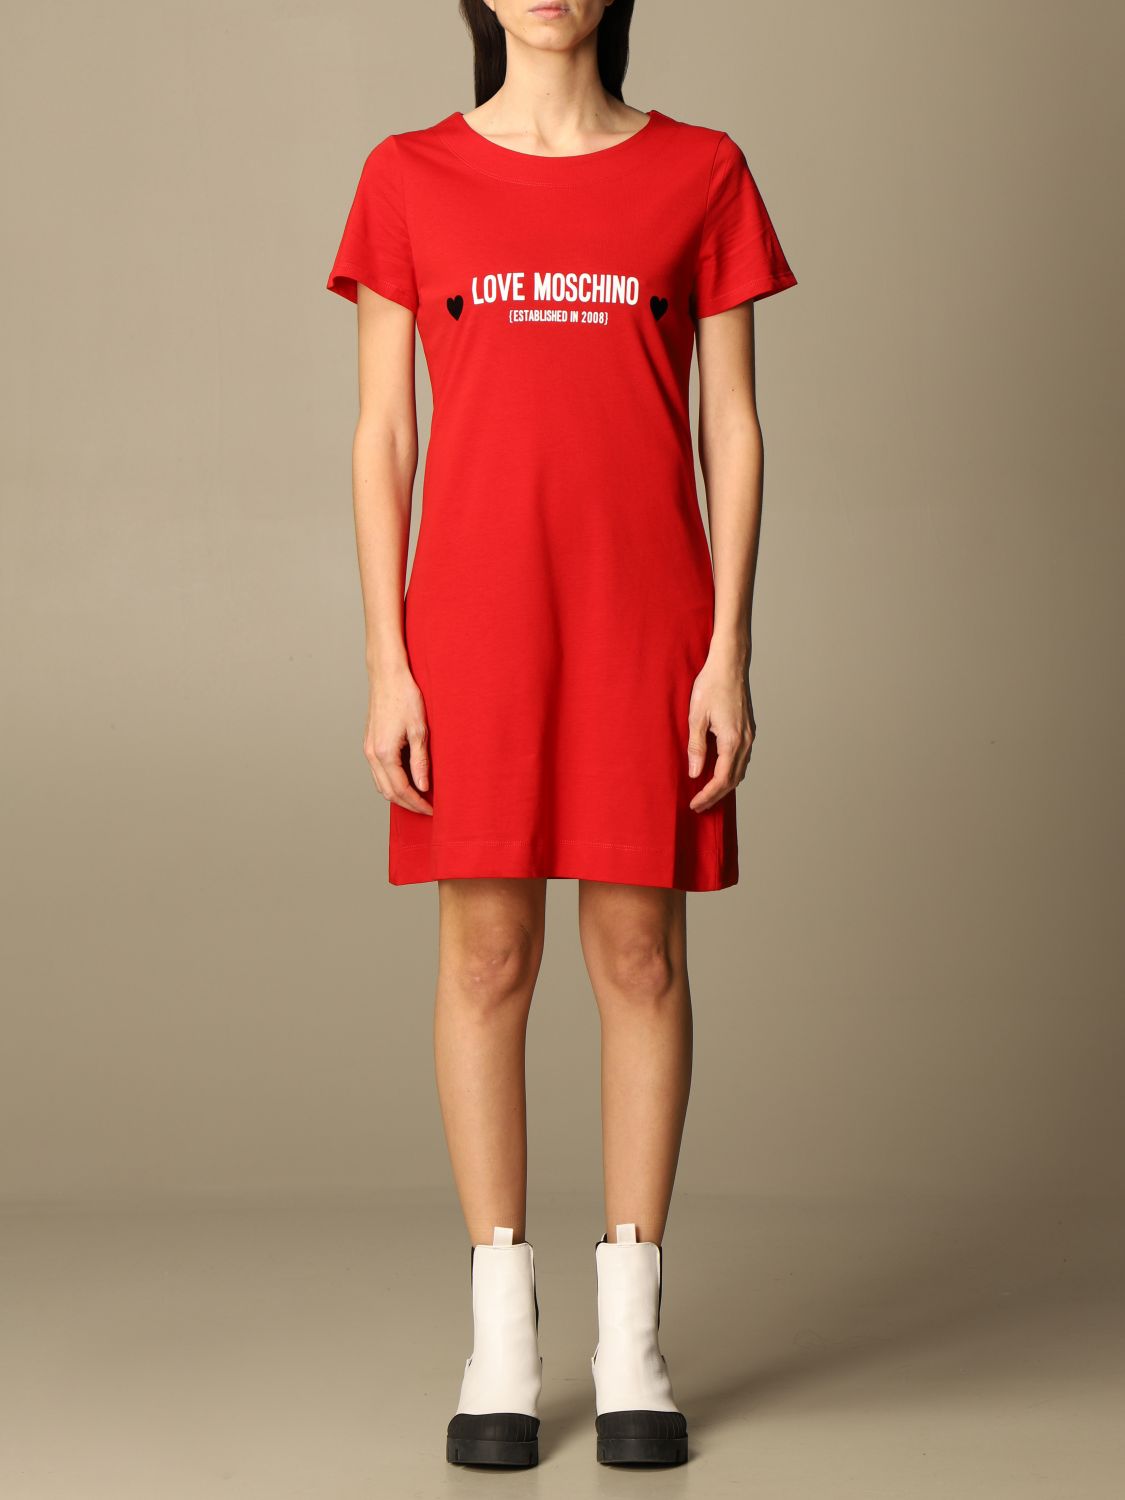 LOVE MOSCHINO: t-shirt dress with logo - Red | Love Moschino dress ...